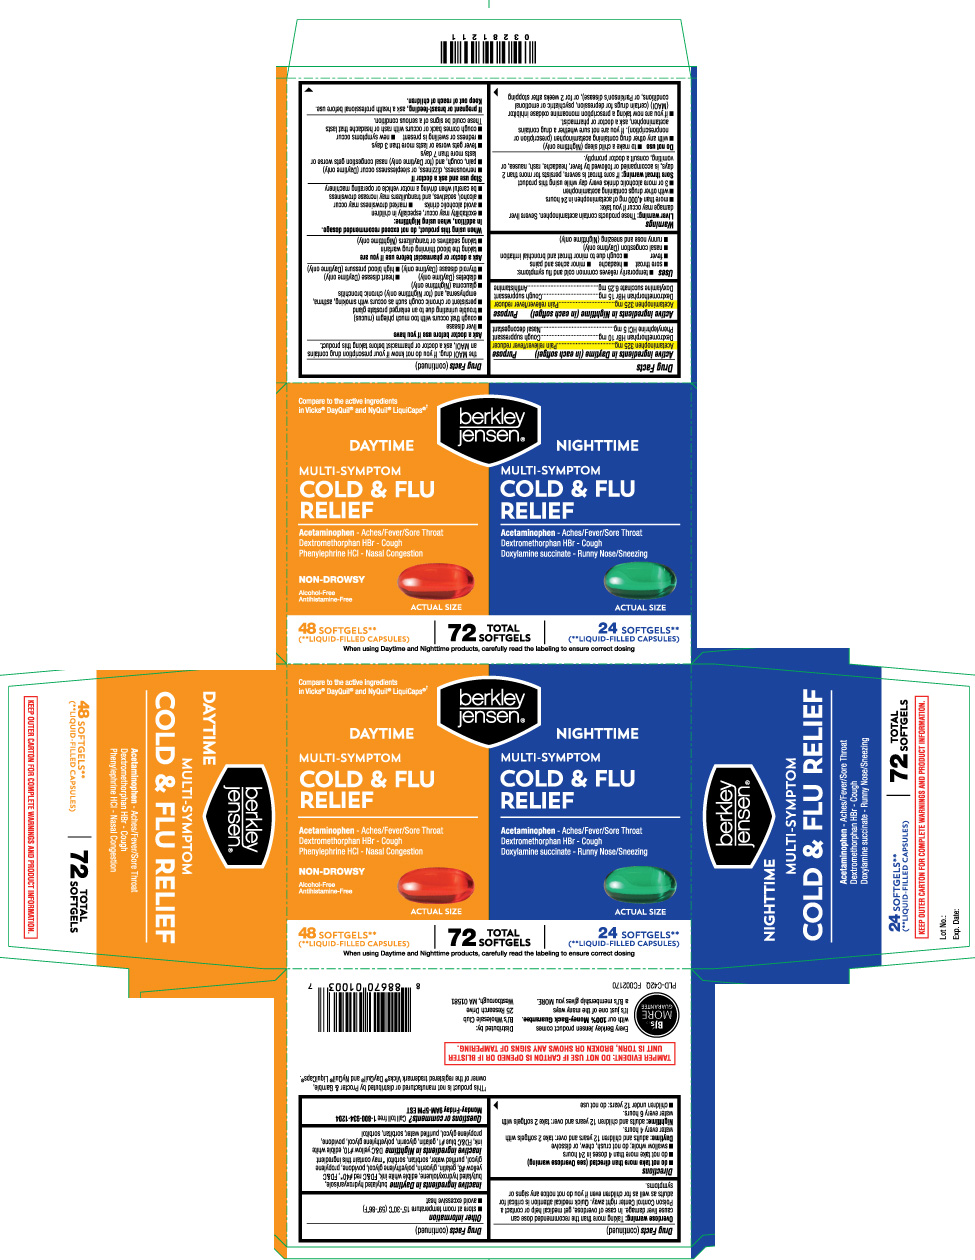 Acetaminophen 325 mg, Dextromethorphan HBr 10 mg, Phenylephrine HCl 5 mg, Acetaminophen 325 mg, Dextromethorphan HBr 15 mg, Doxylamine succinate 6.25 mg